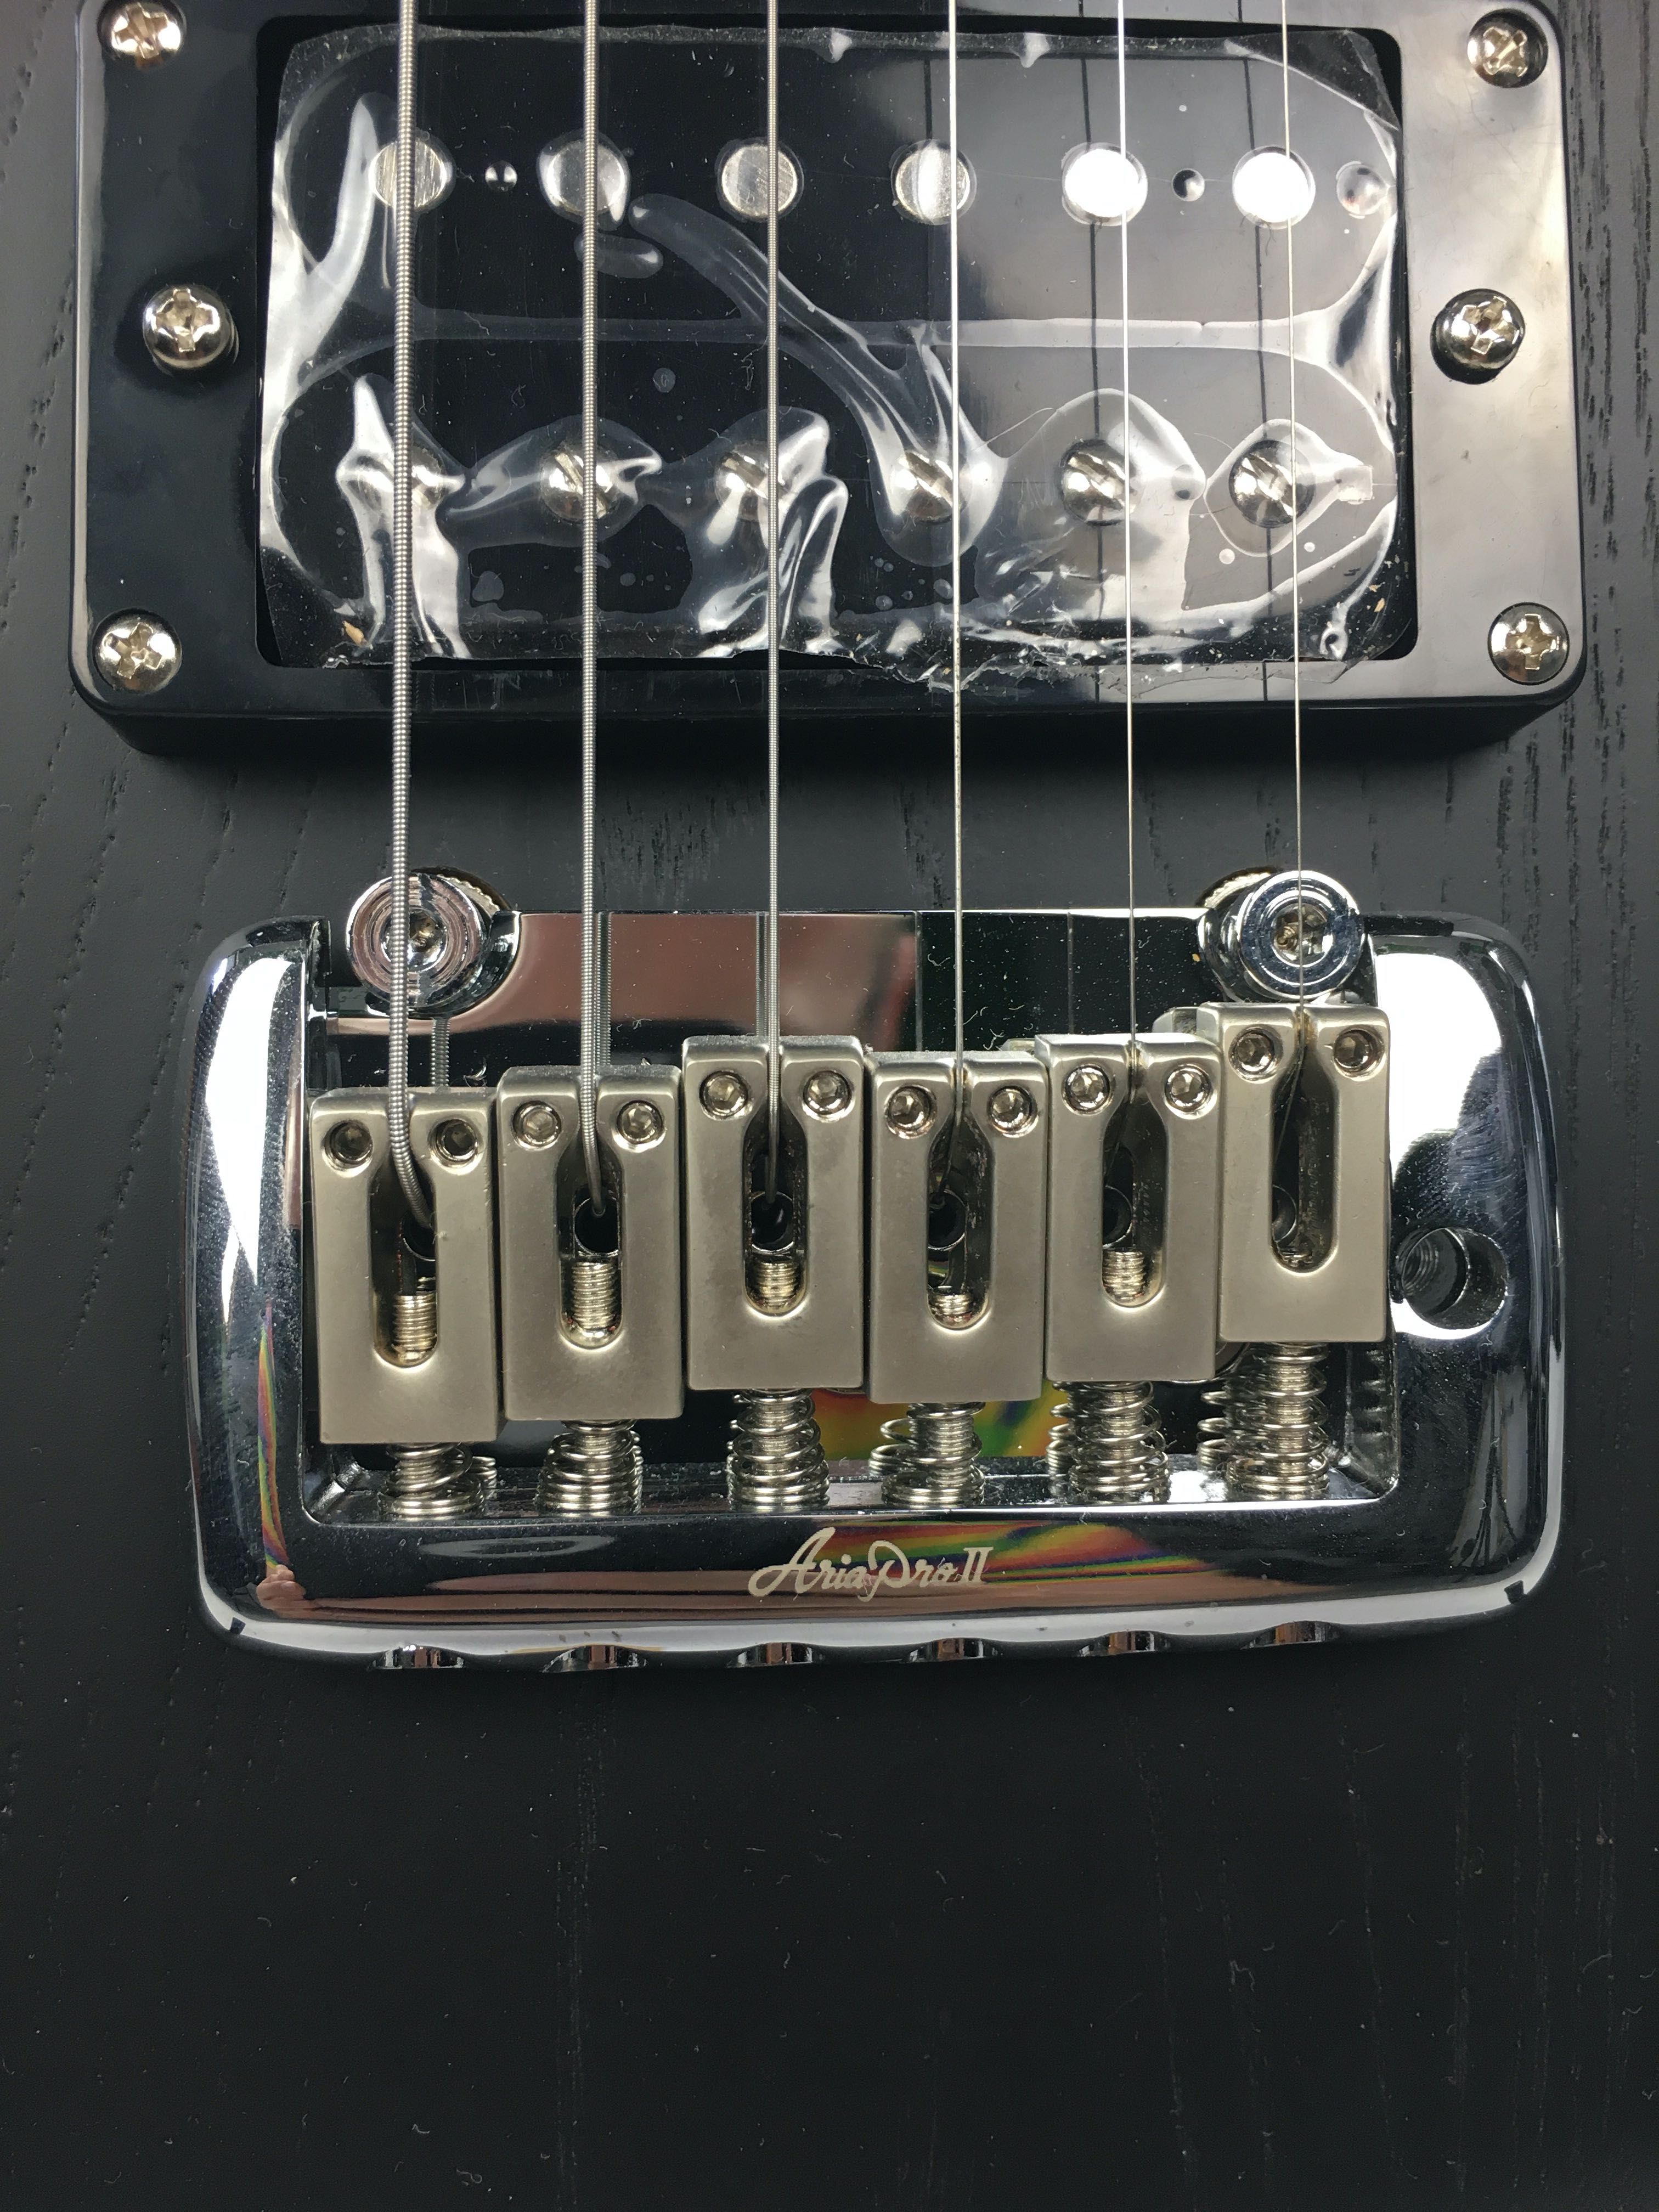 ARIA PRO II MAC-DLX (STBK) HH Gitara elektryczna